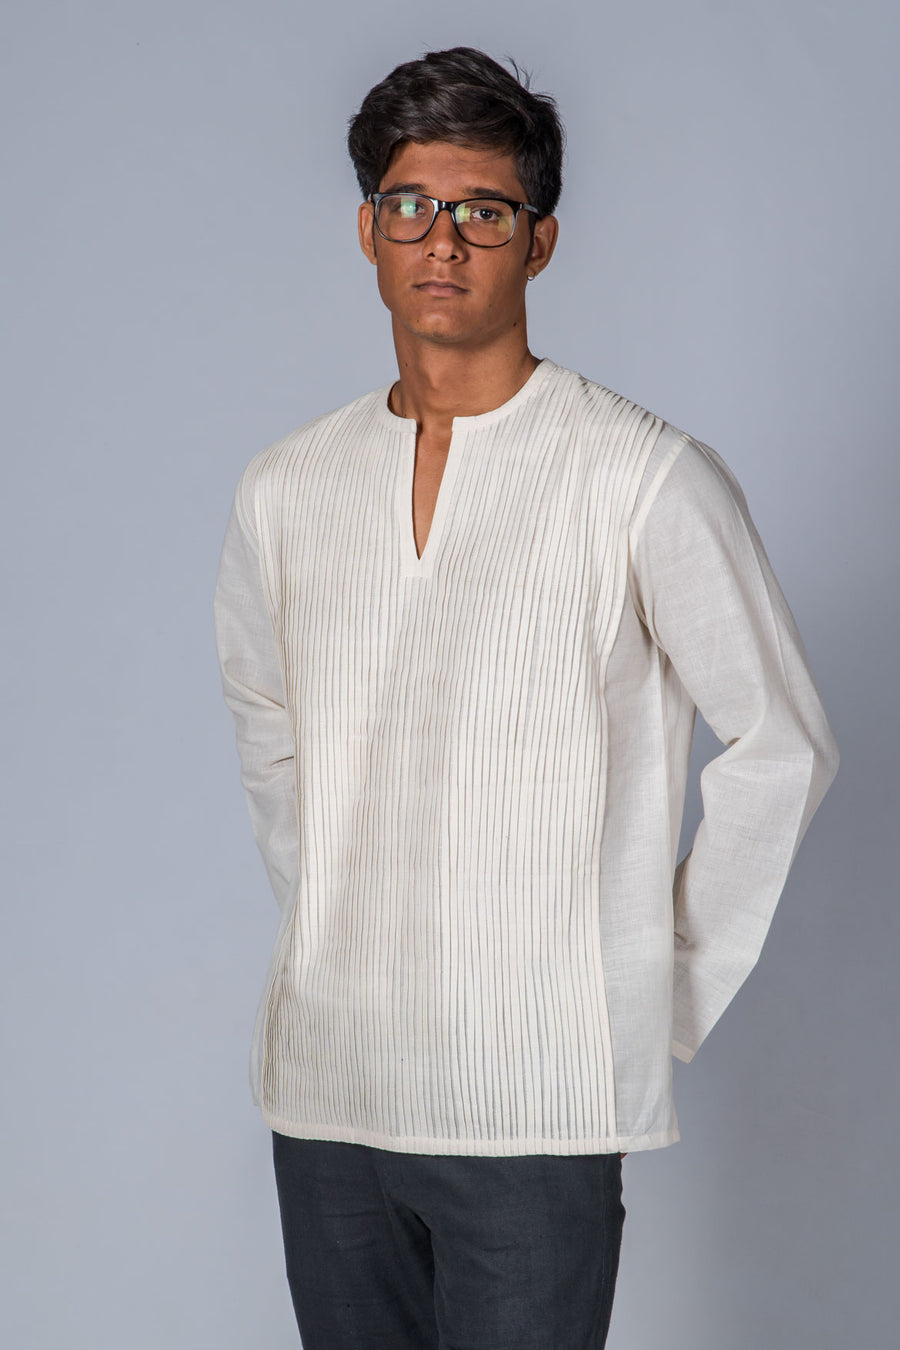 Off-White Mangalgiri Cotton Shirt - COTTON TREE - Upasana Design Studio